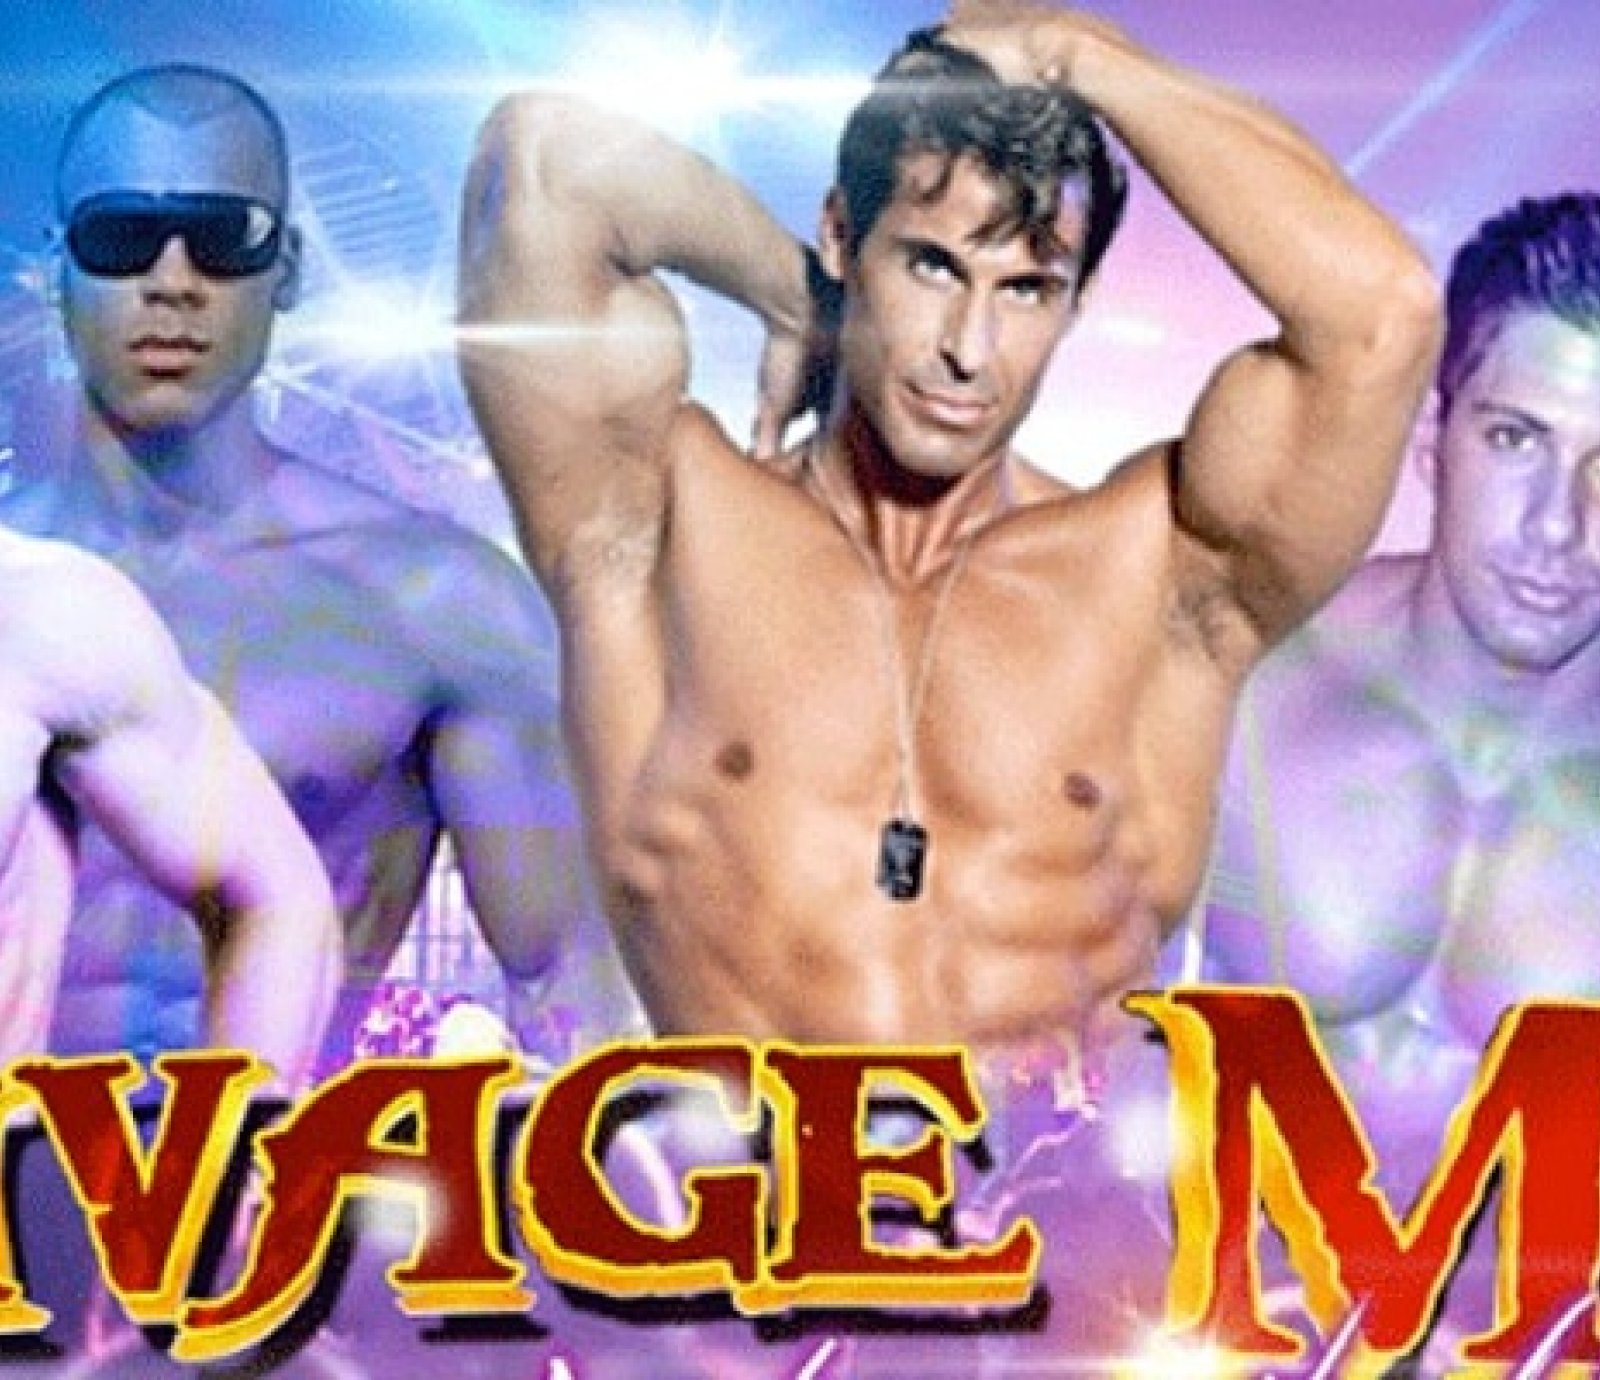 Savage Men Male Revue - Atlantic City